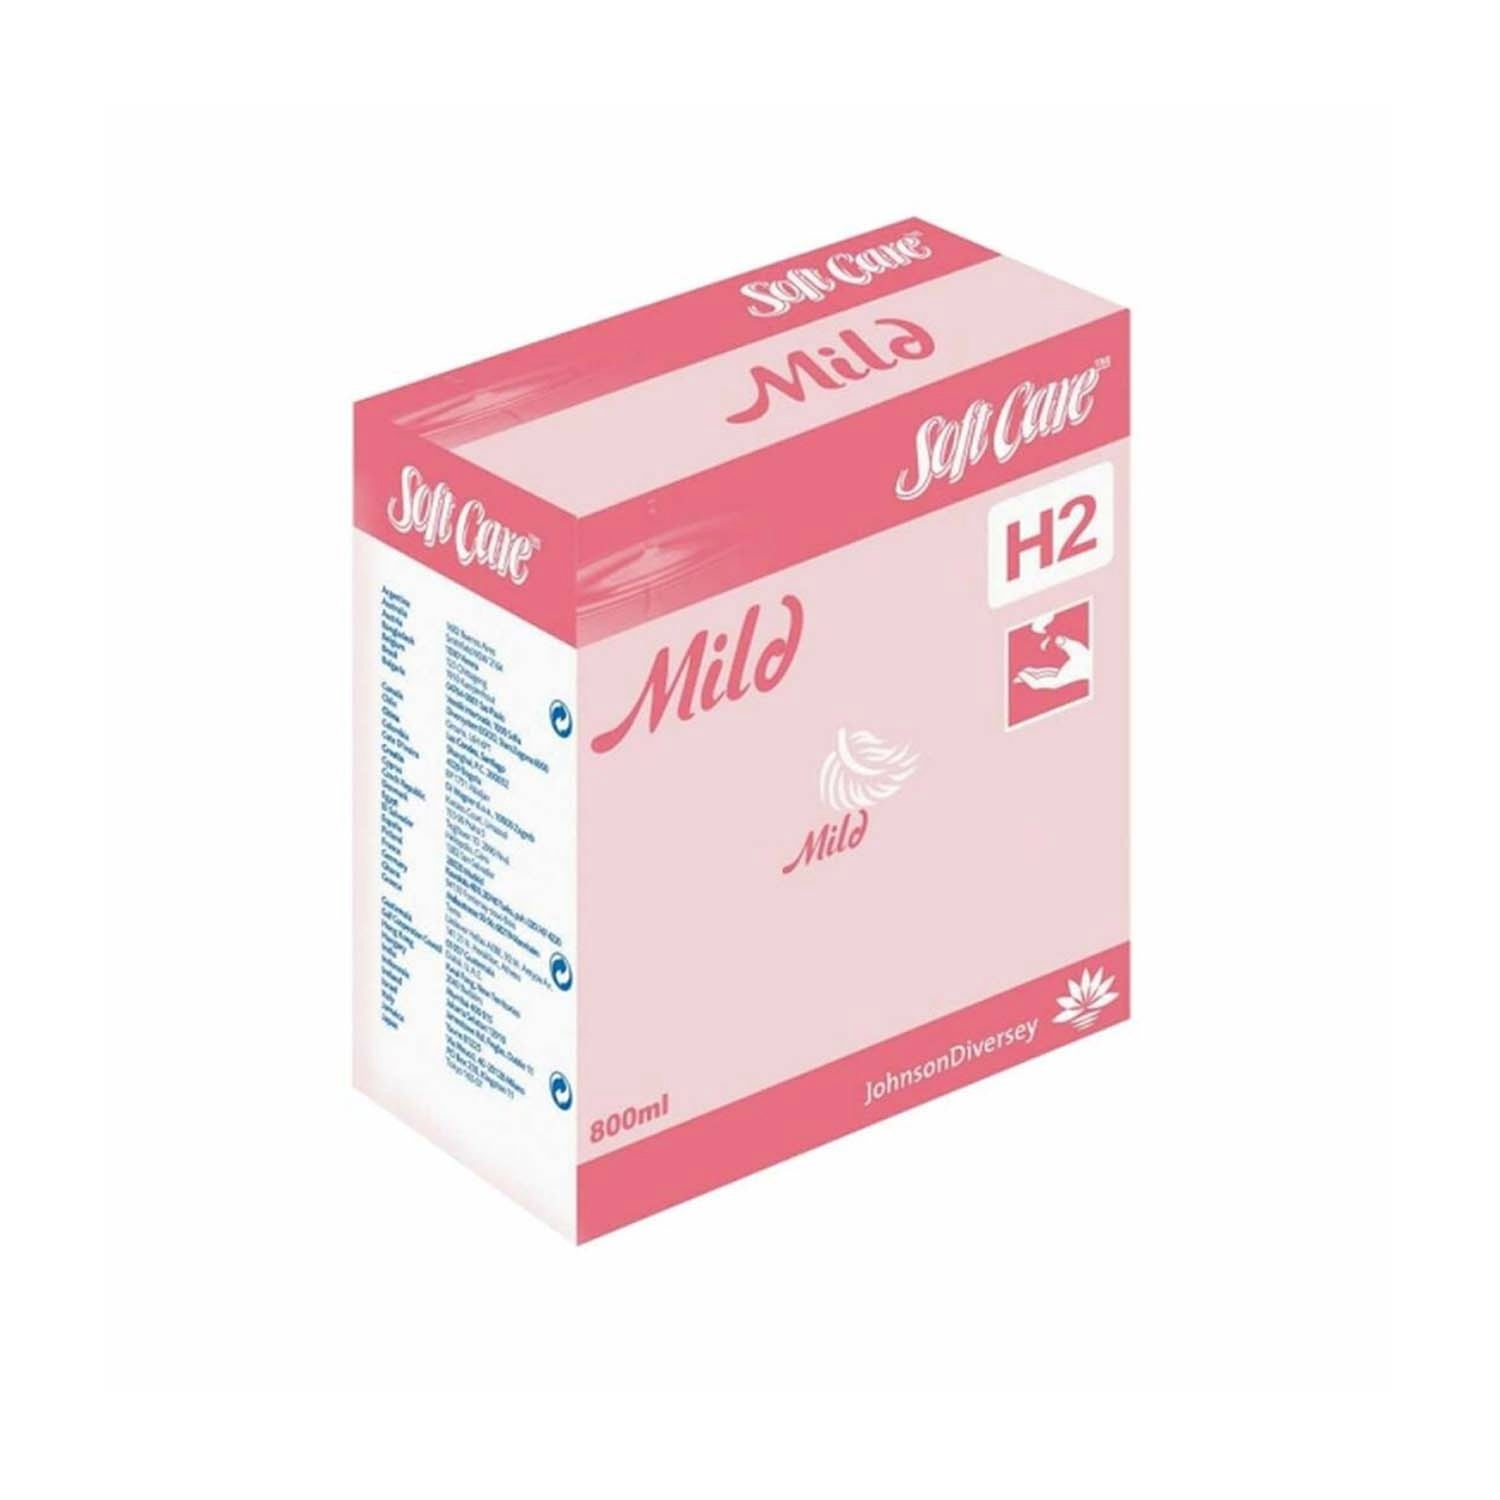 Soft Care Mild H2 | 800ml | Pack of 6